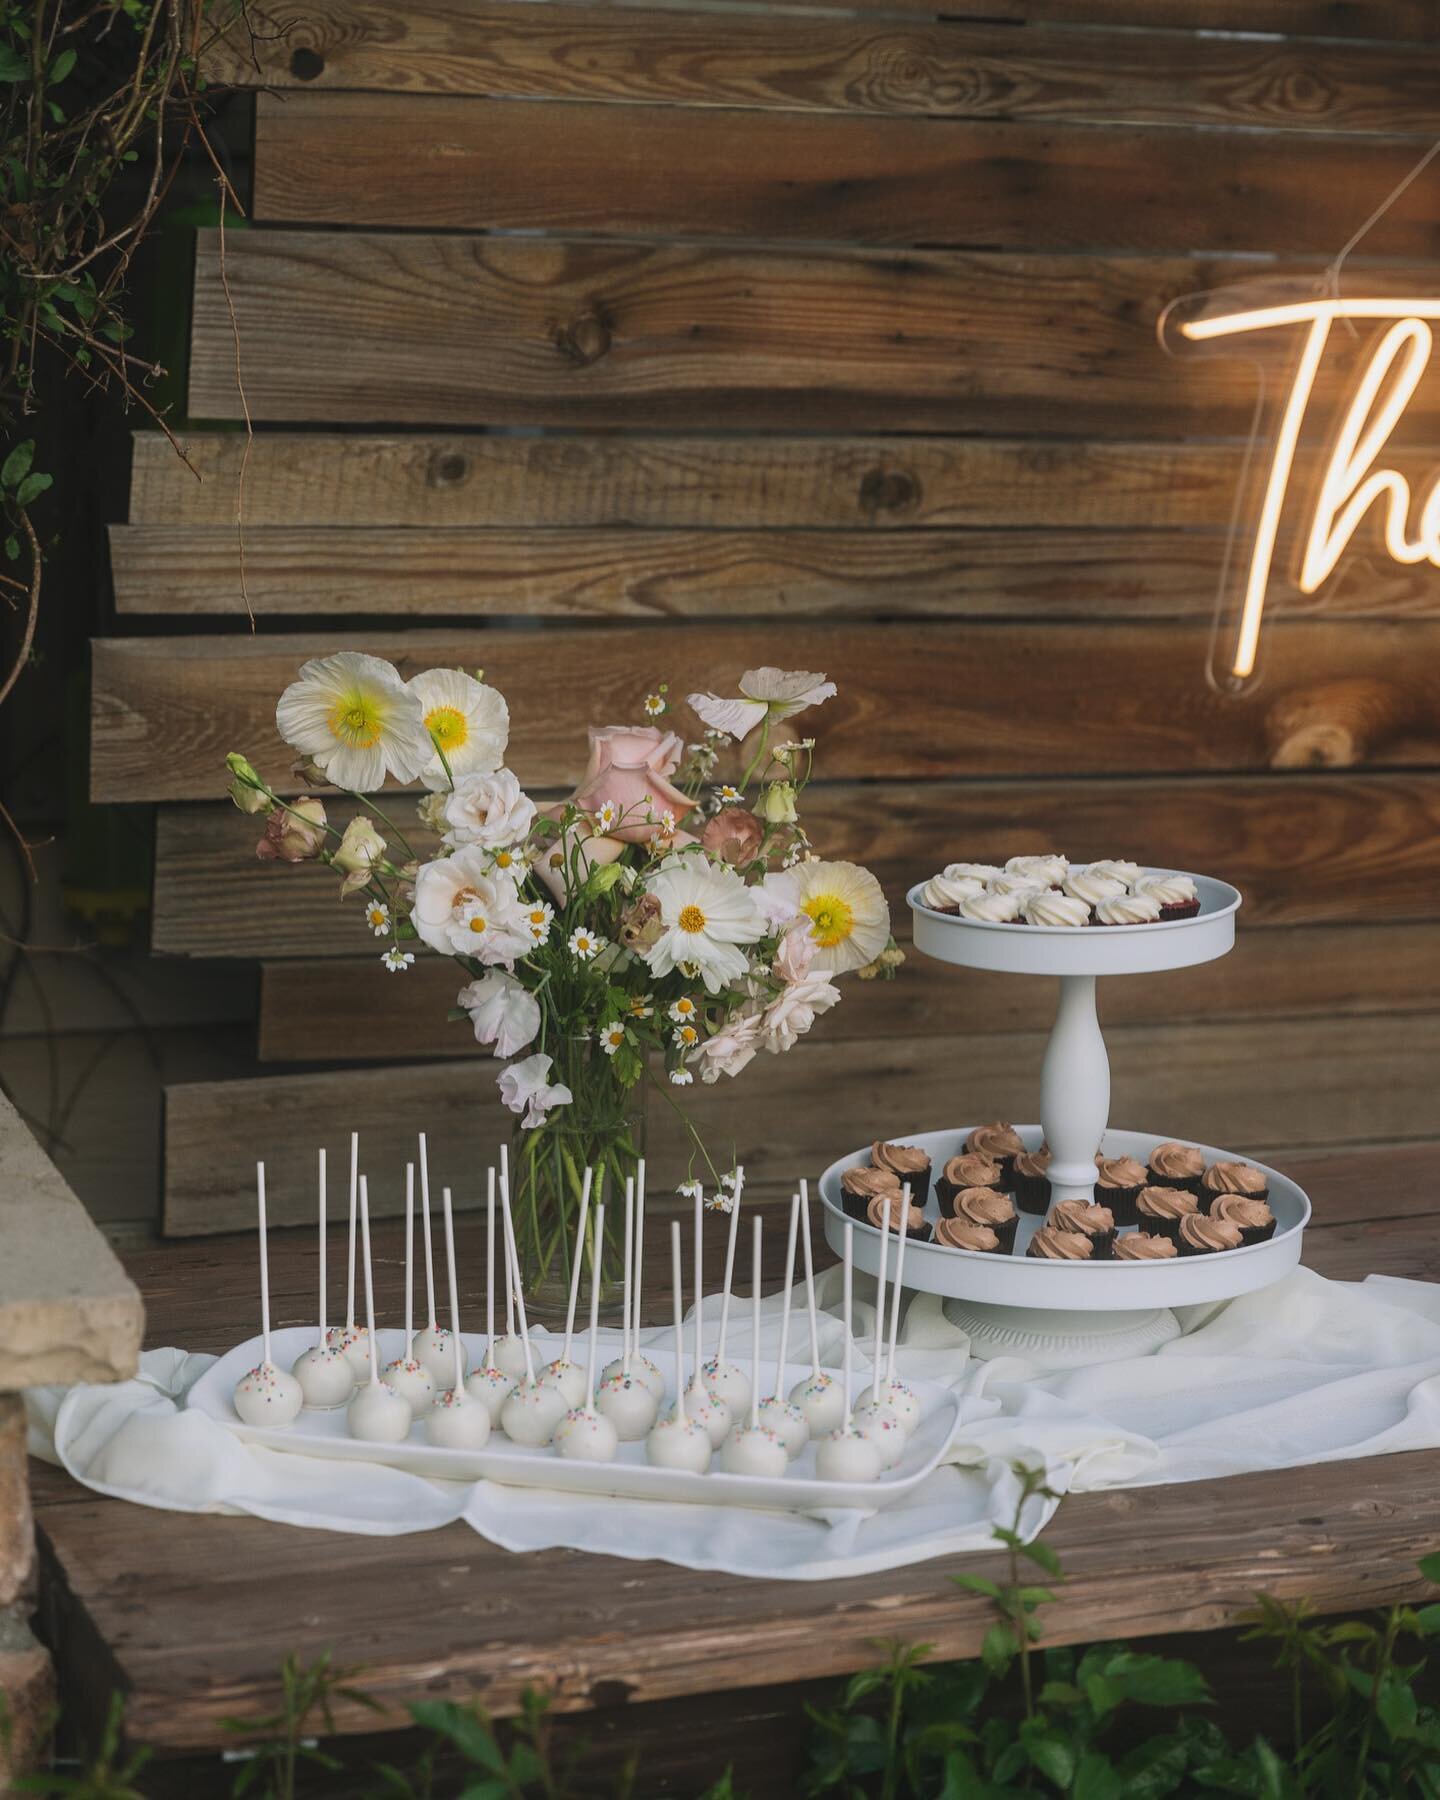 Dreamy dessert tables ✨

@westimagery 
@flowersbymaemae 
@serendipity_weddings